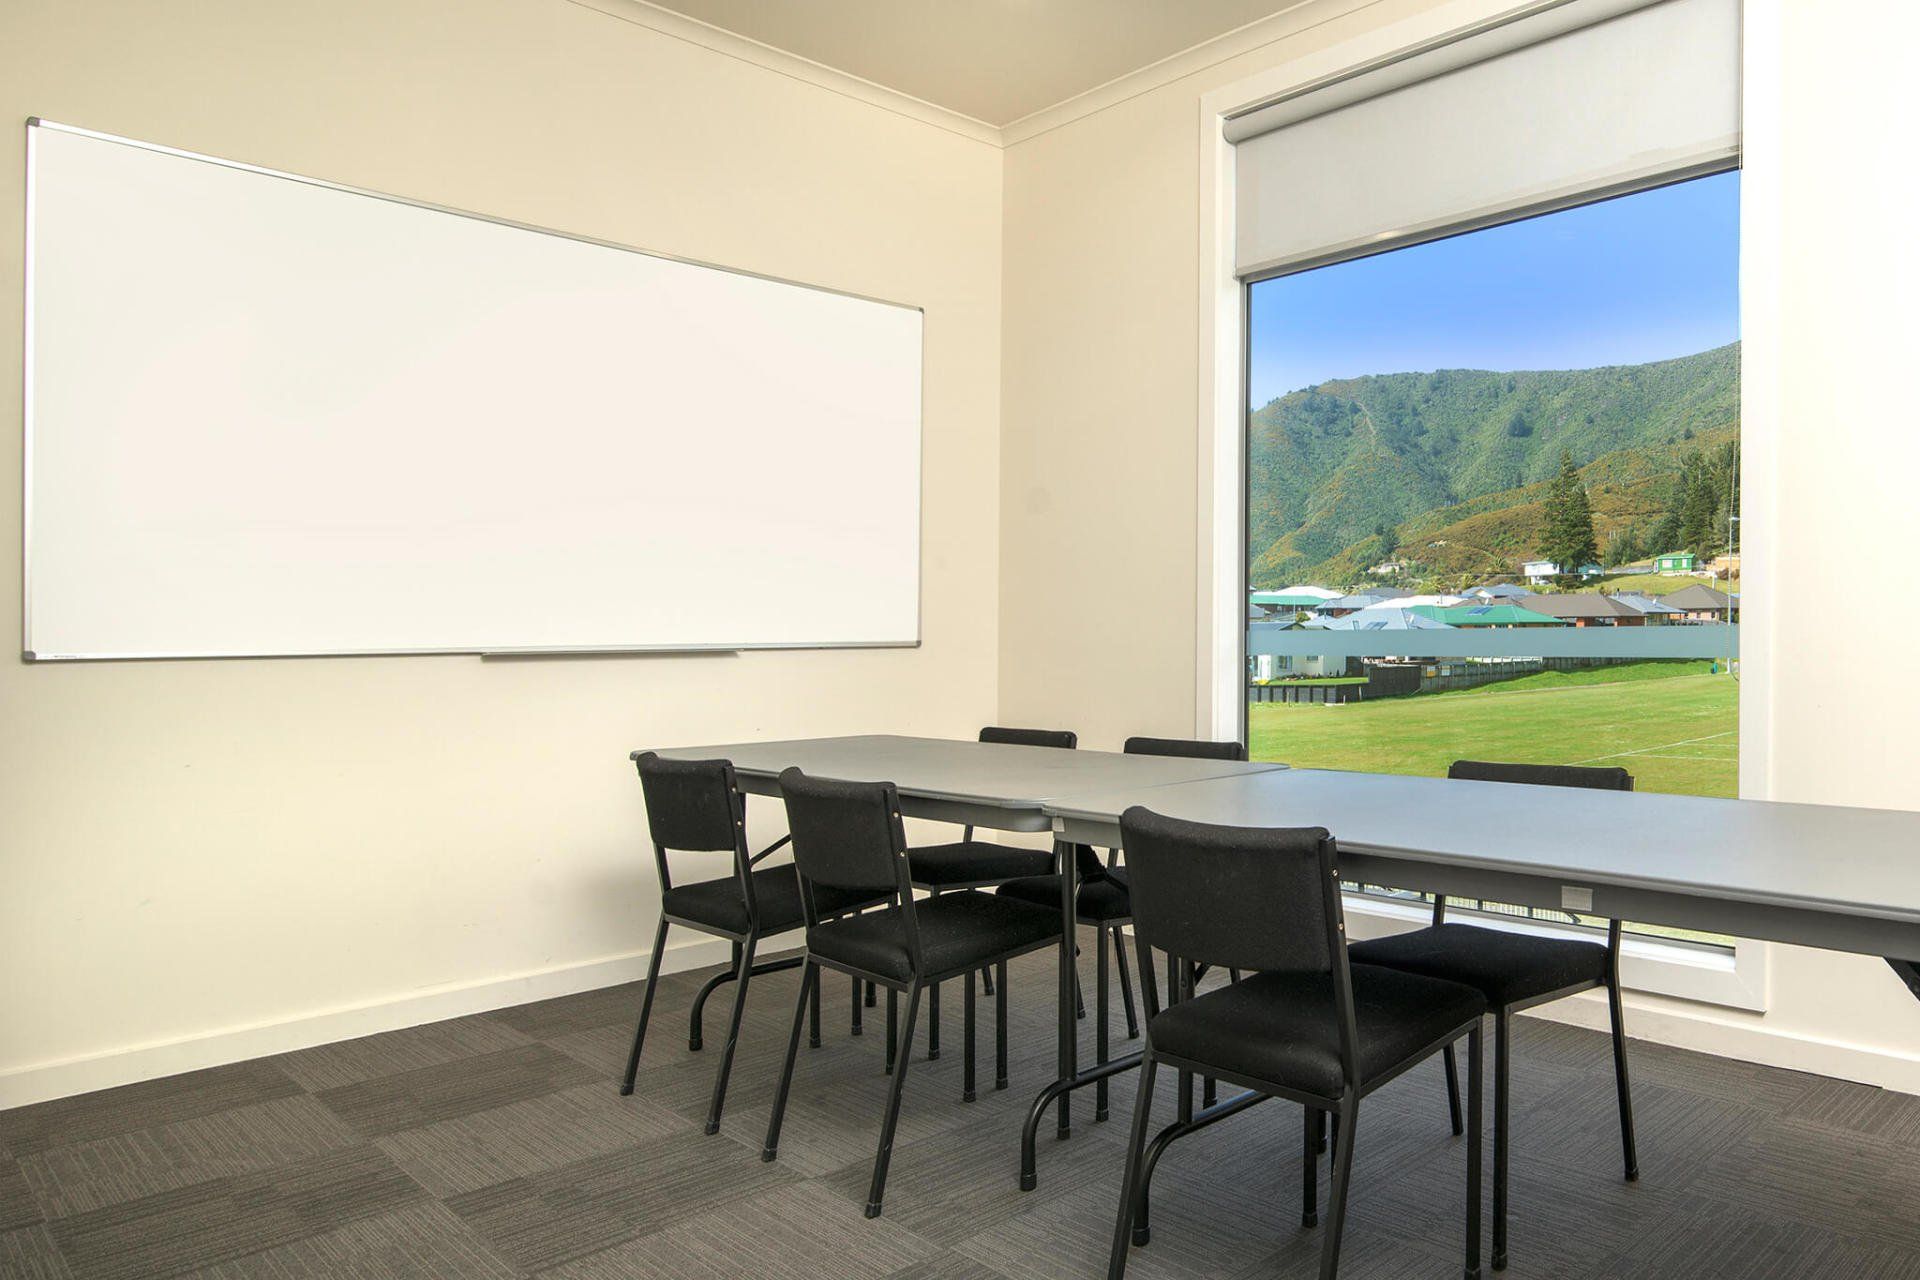 The Lions Club Board Room at Port Marlborough Pavilion in Picton, Marlborough, NZ